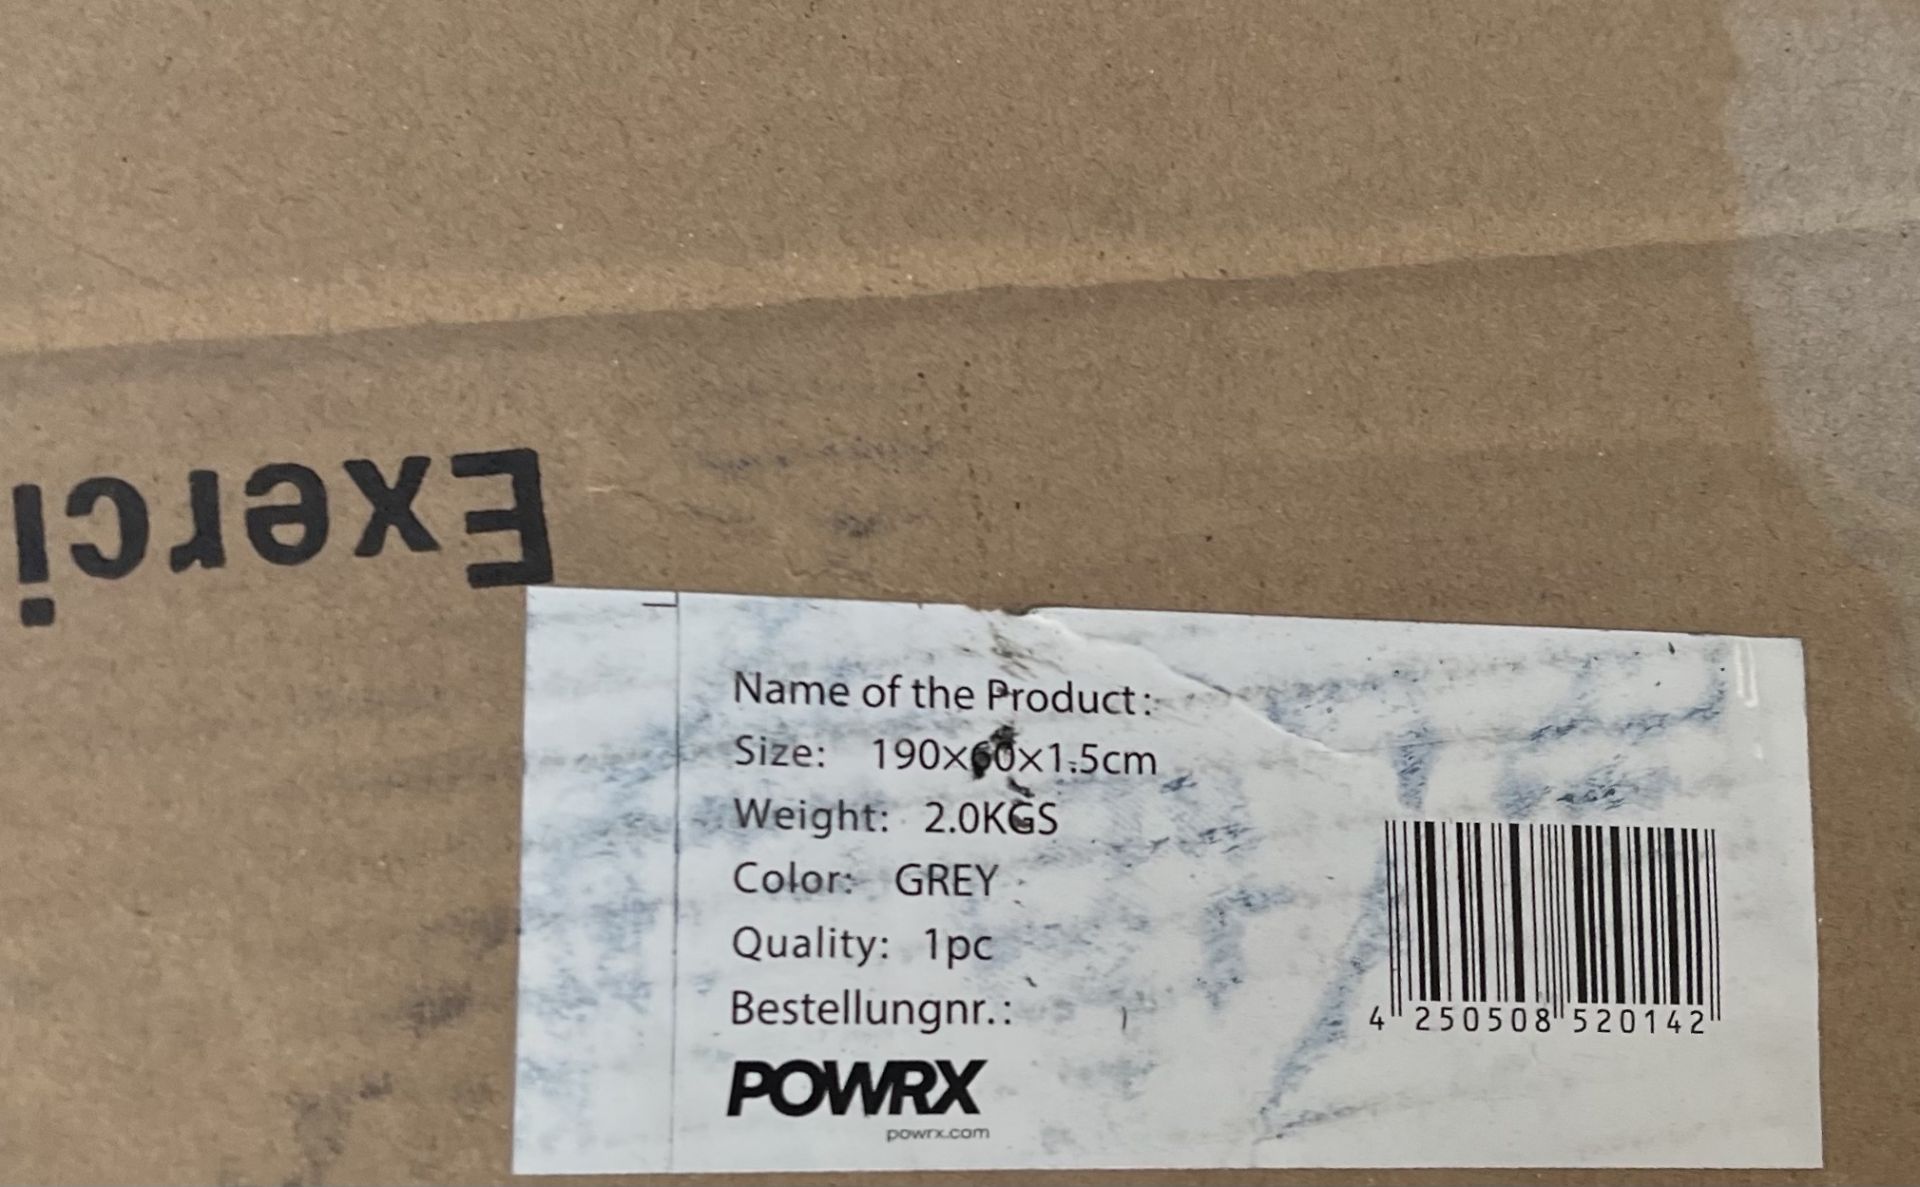 Powrx Exercise Mat 190x50x1.5cm - NEW & BOXED - RRP CIRCA £40 ! - Image 2 of 3